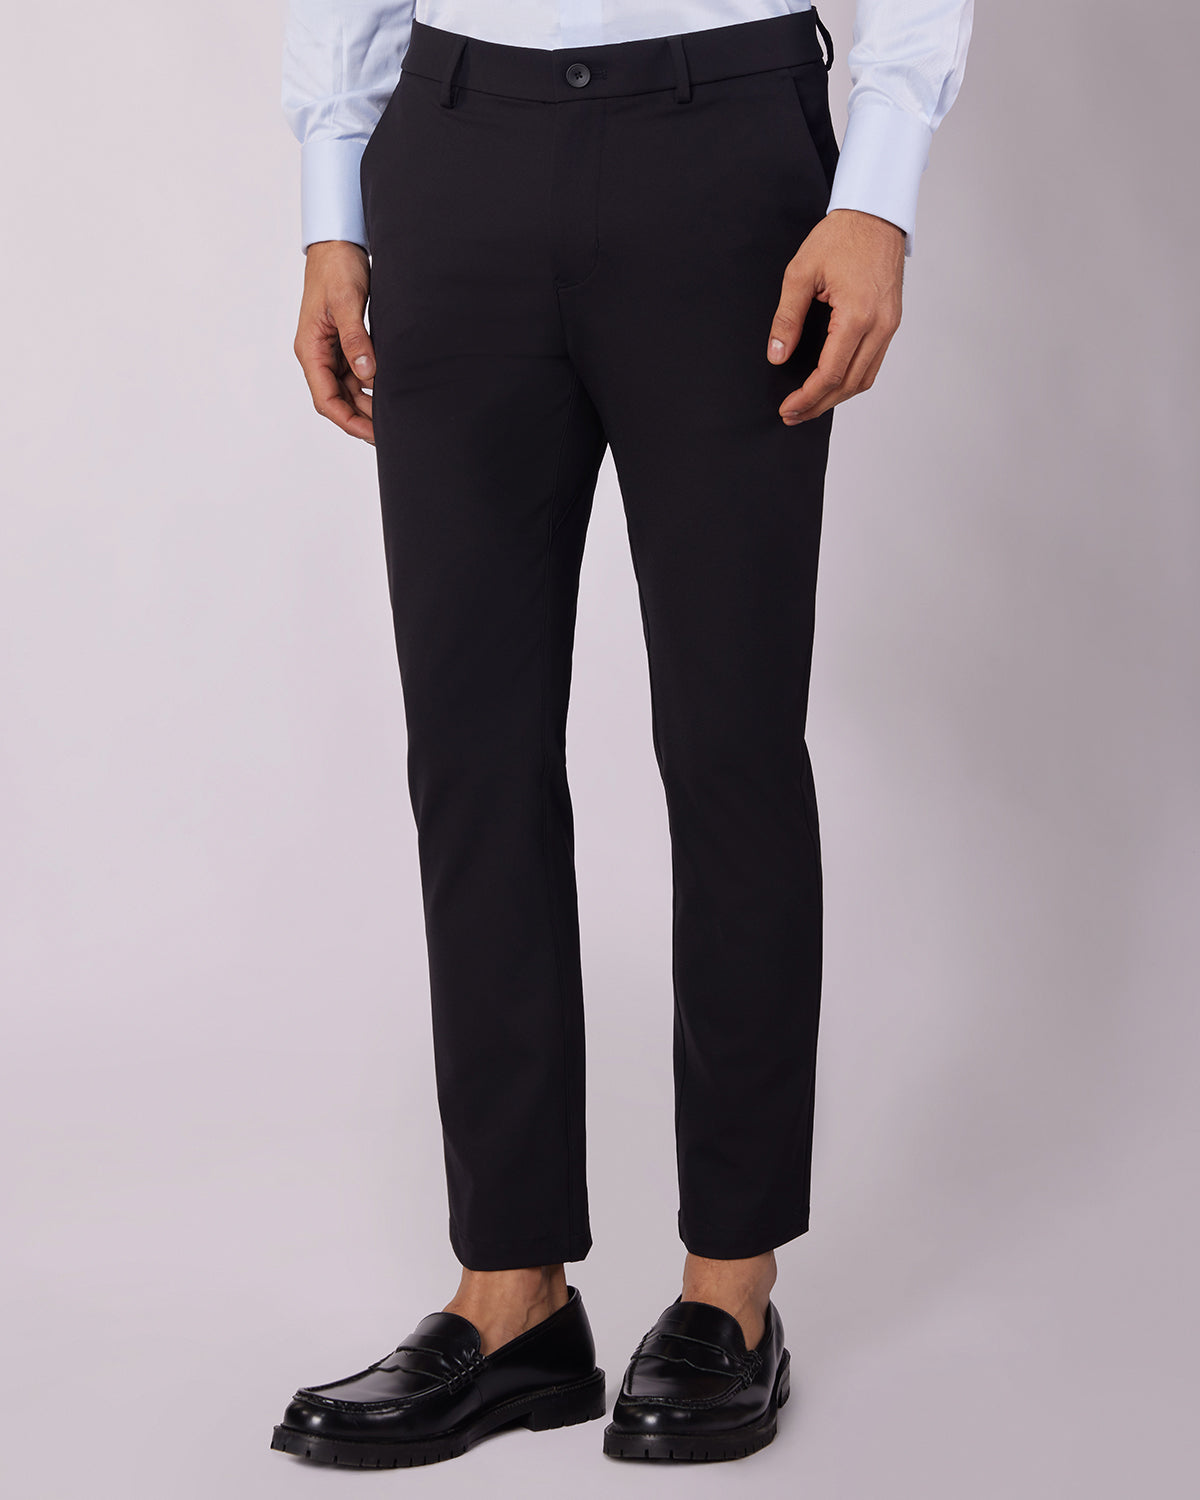 Men's Tailored Fit Trousers | Suit Direct